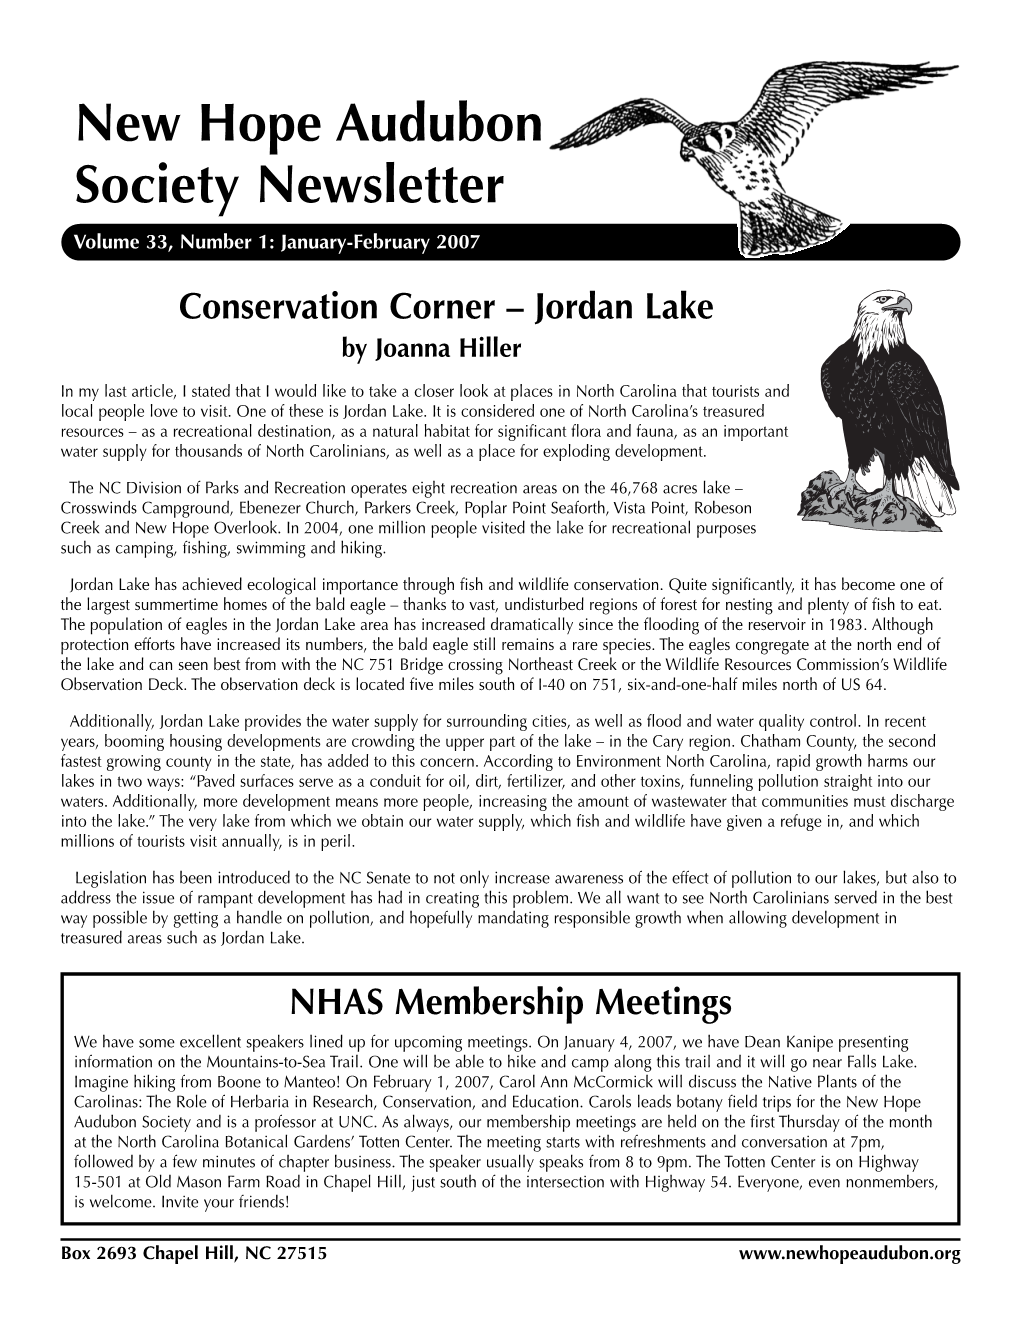 New Hope Audubon Society Newsletter Volume 33, Number 1: January-February 2007